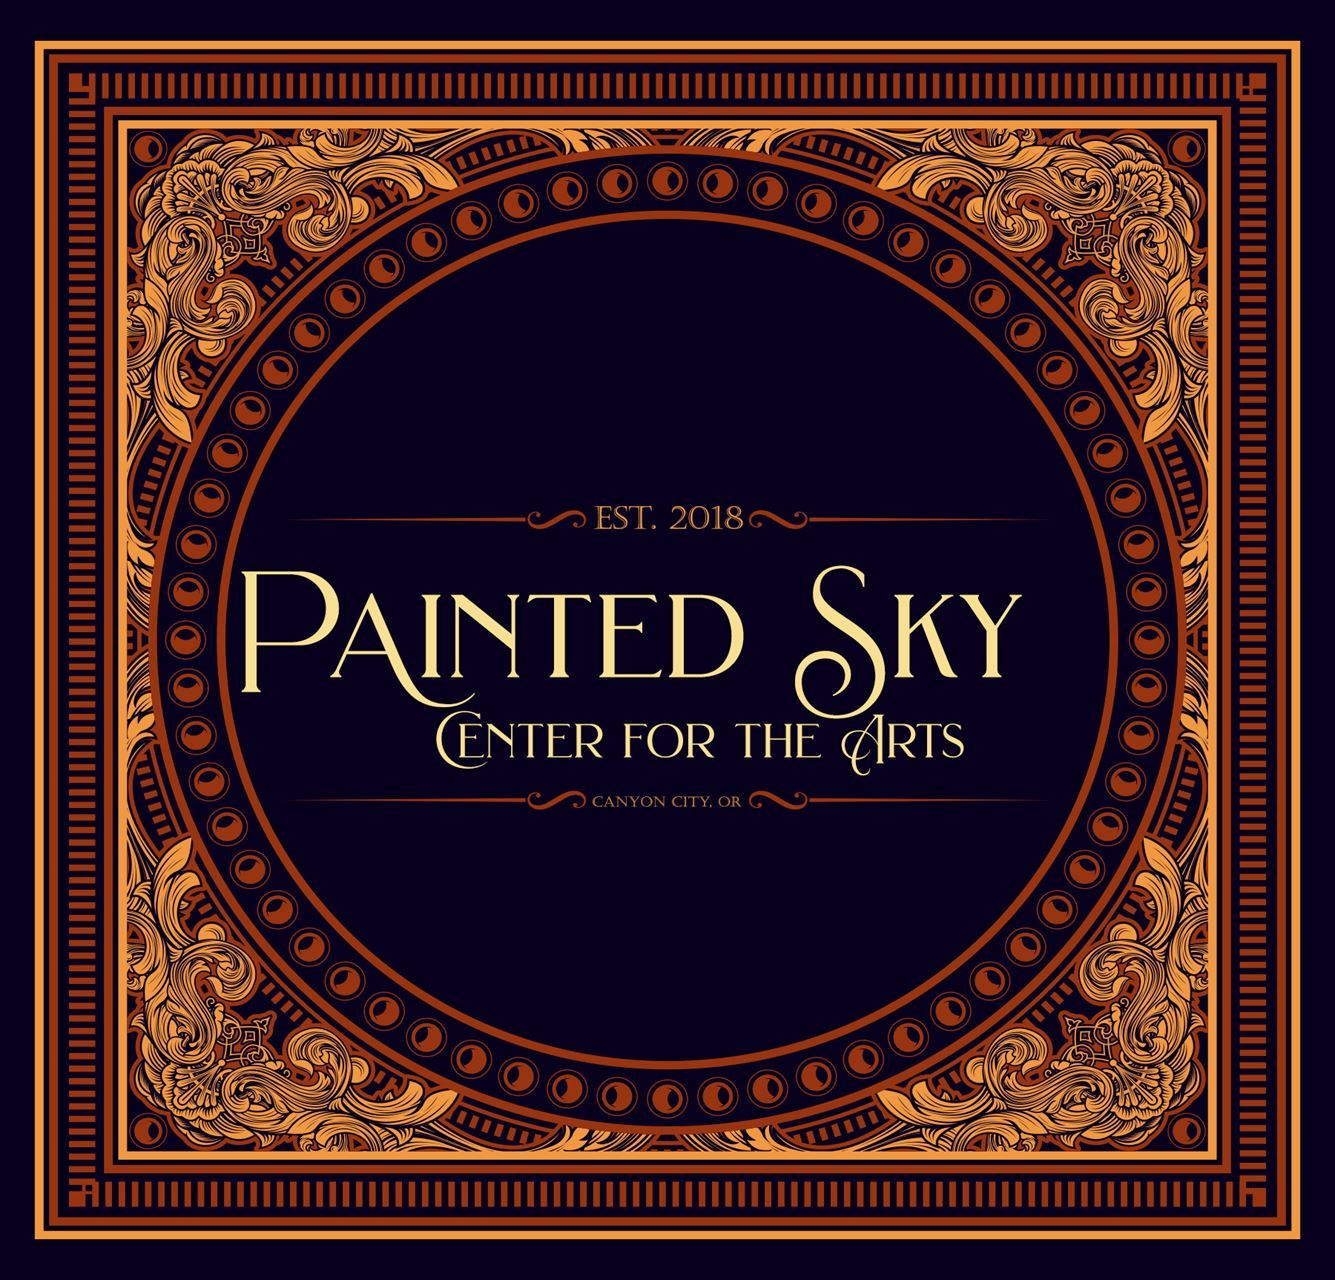 Painted Sky Art Center